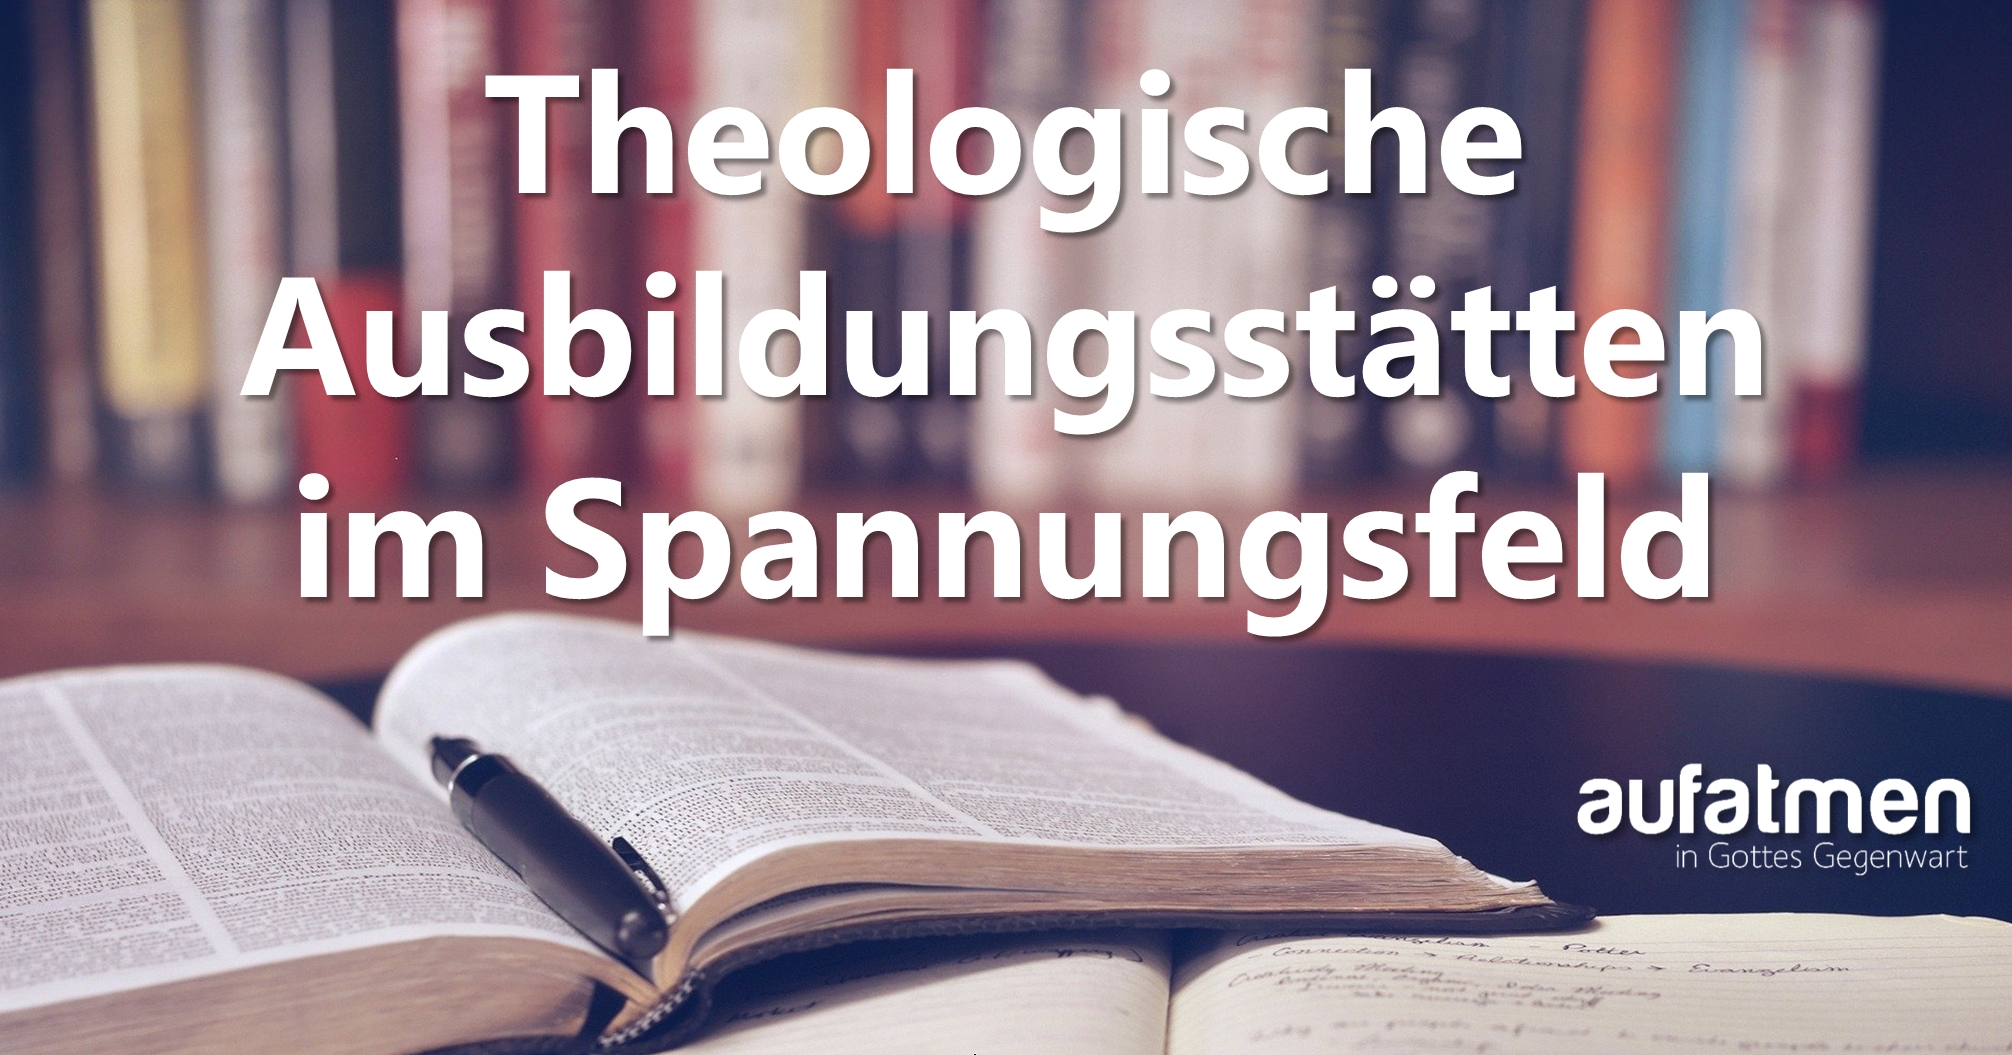 Theologische Ausbildungsstätten im Spannungsfeld